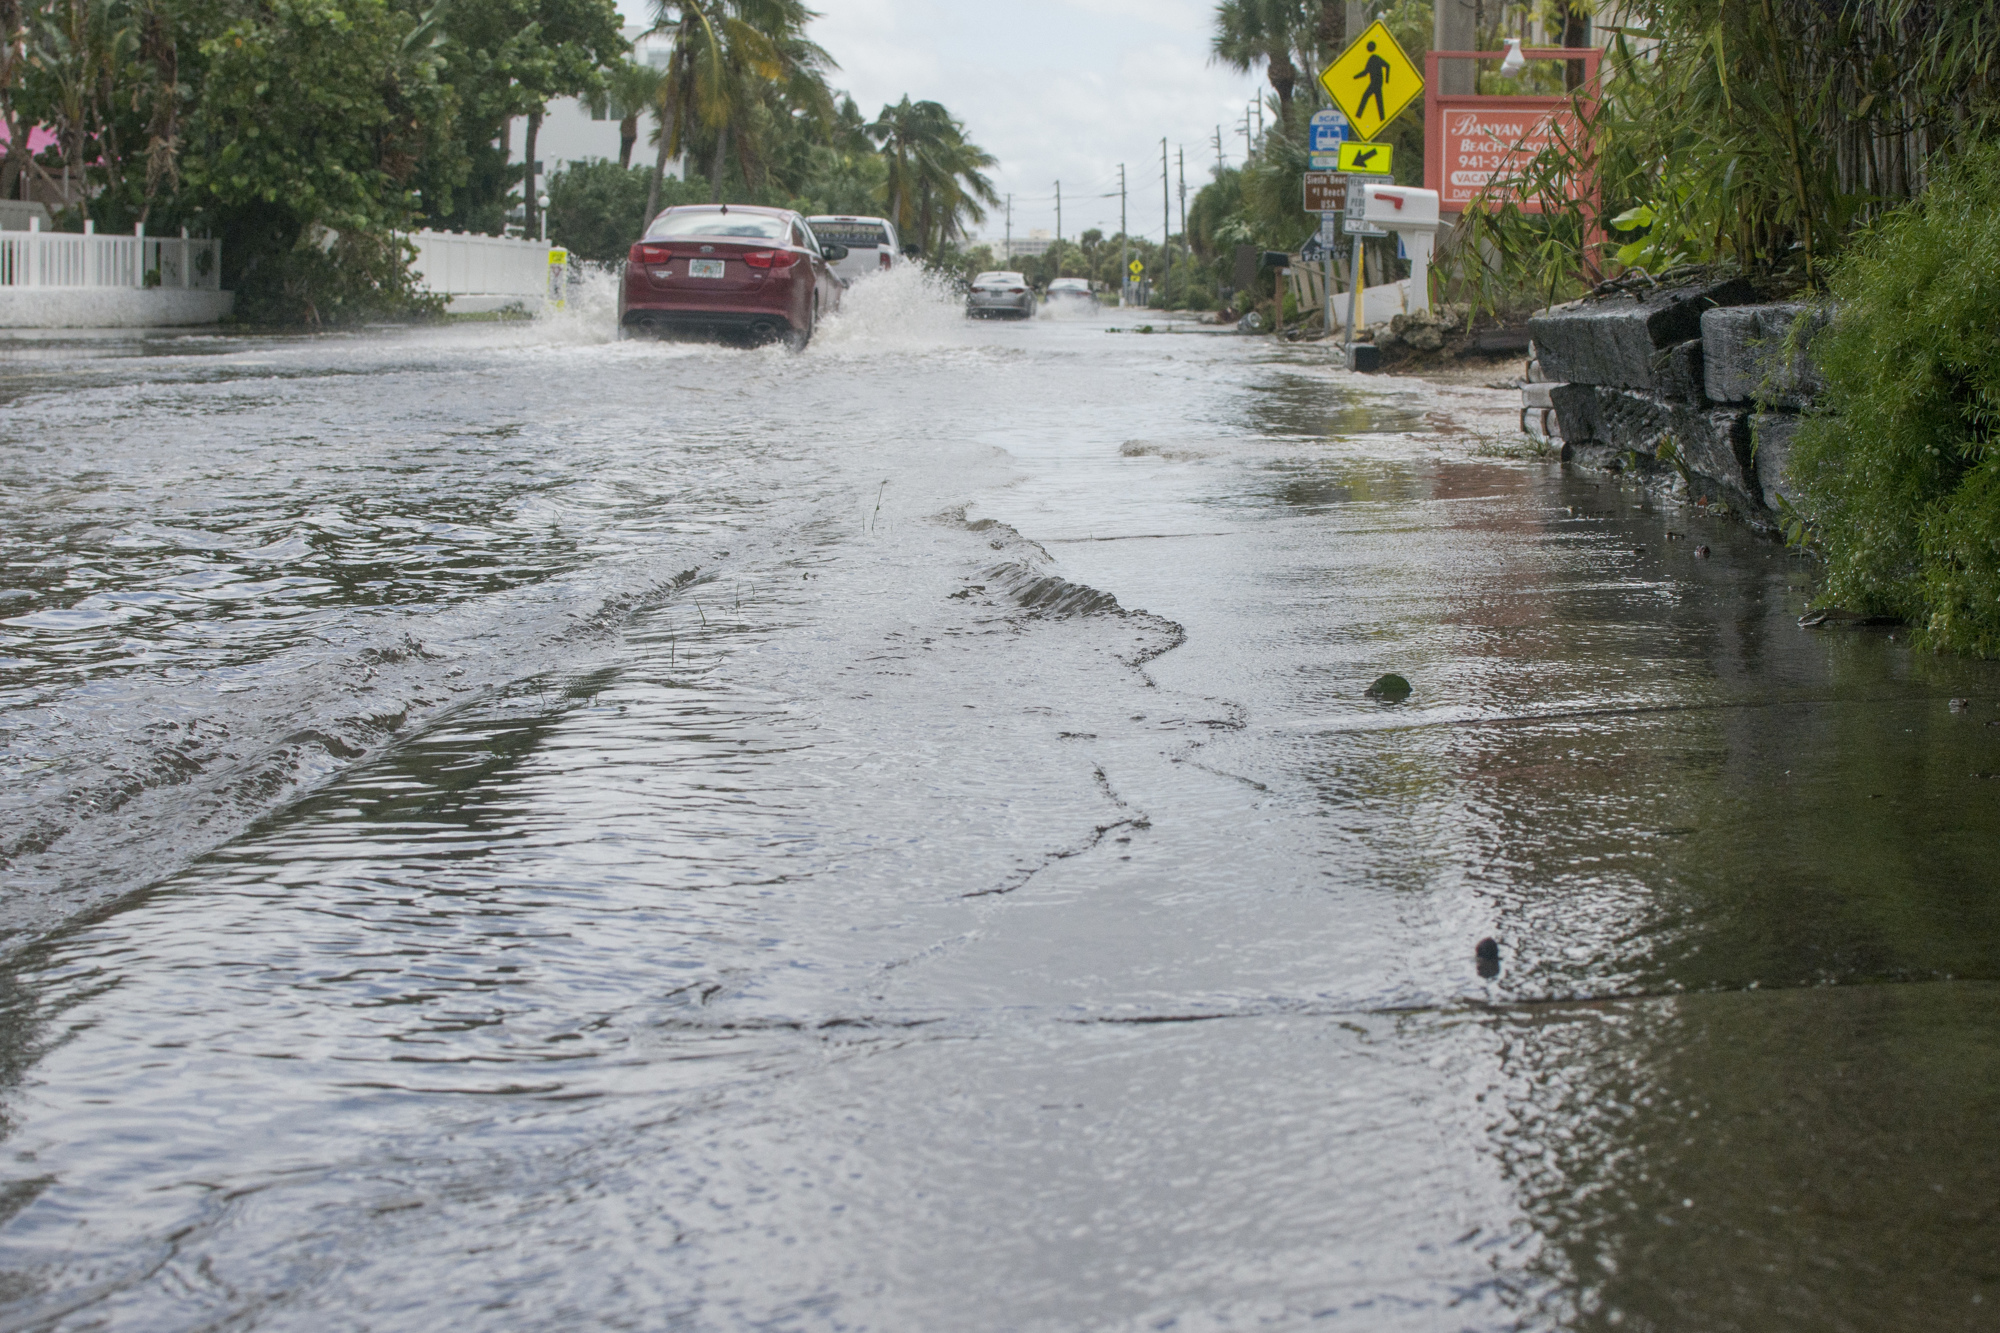 Hurricane Irma's rain brought flooding to the area.